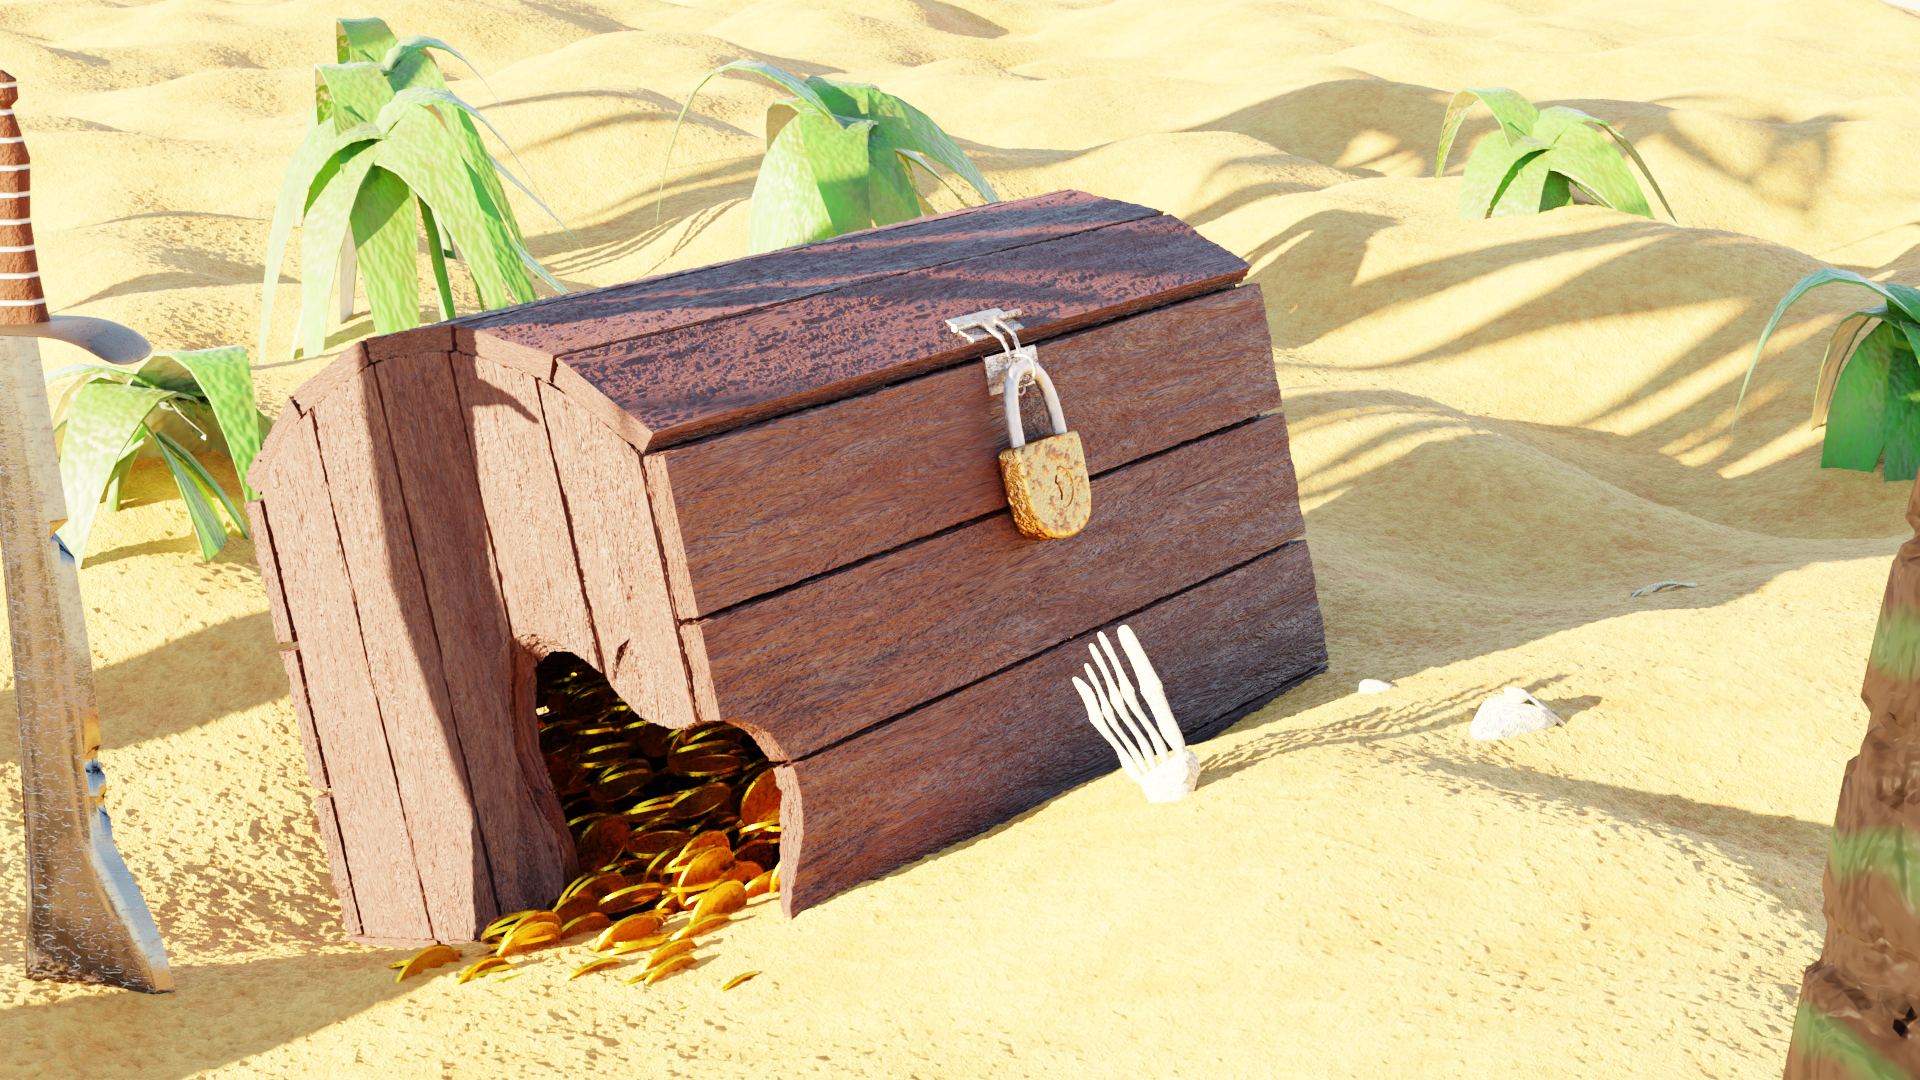 Pirates Treasure chest with gold, the typical pirate treasure scene :)